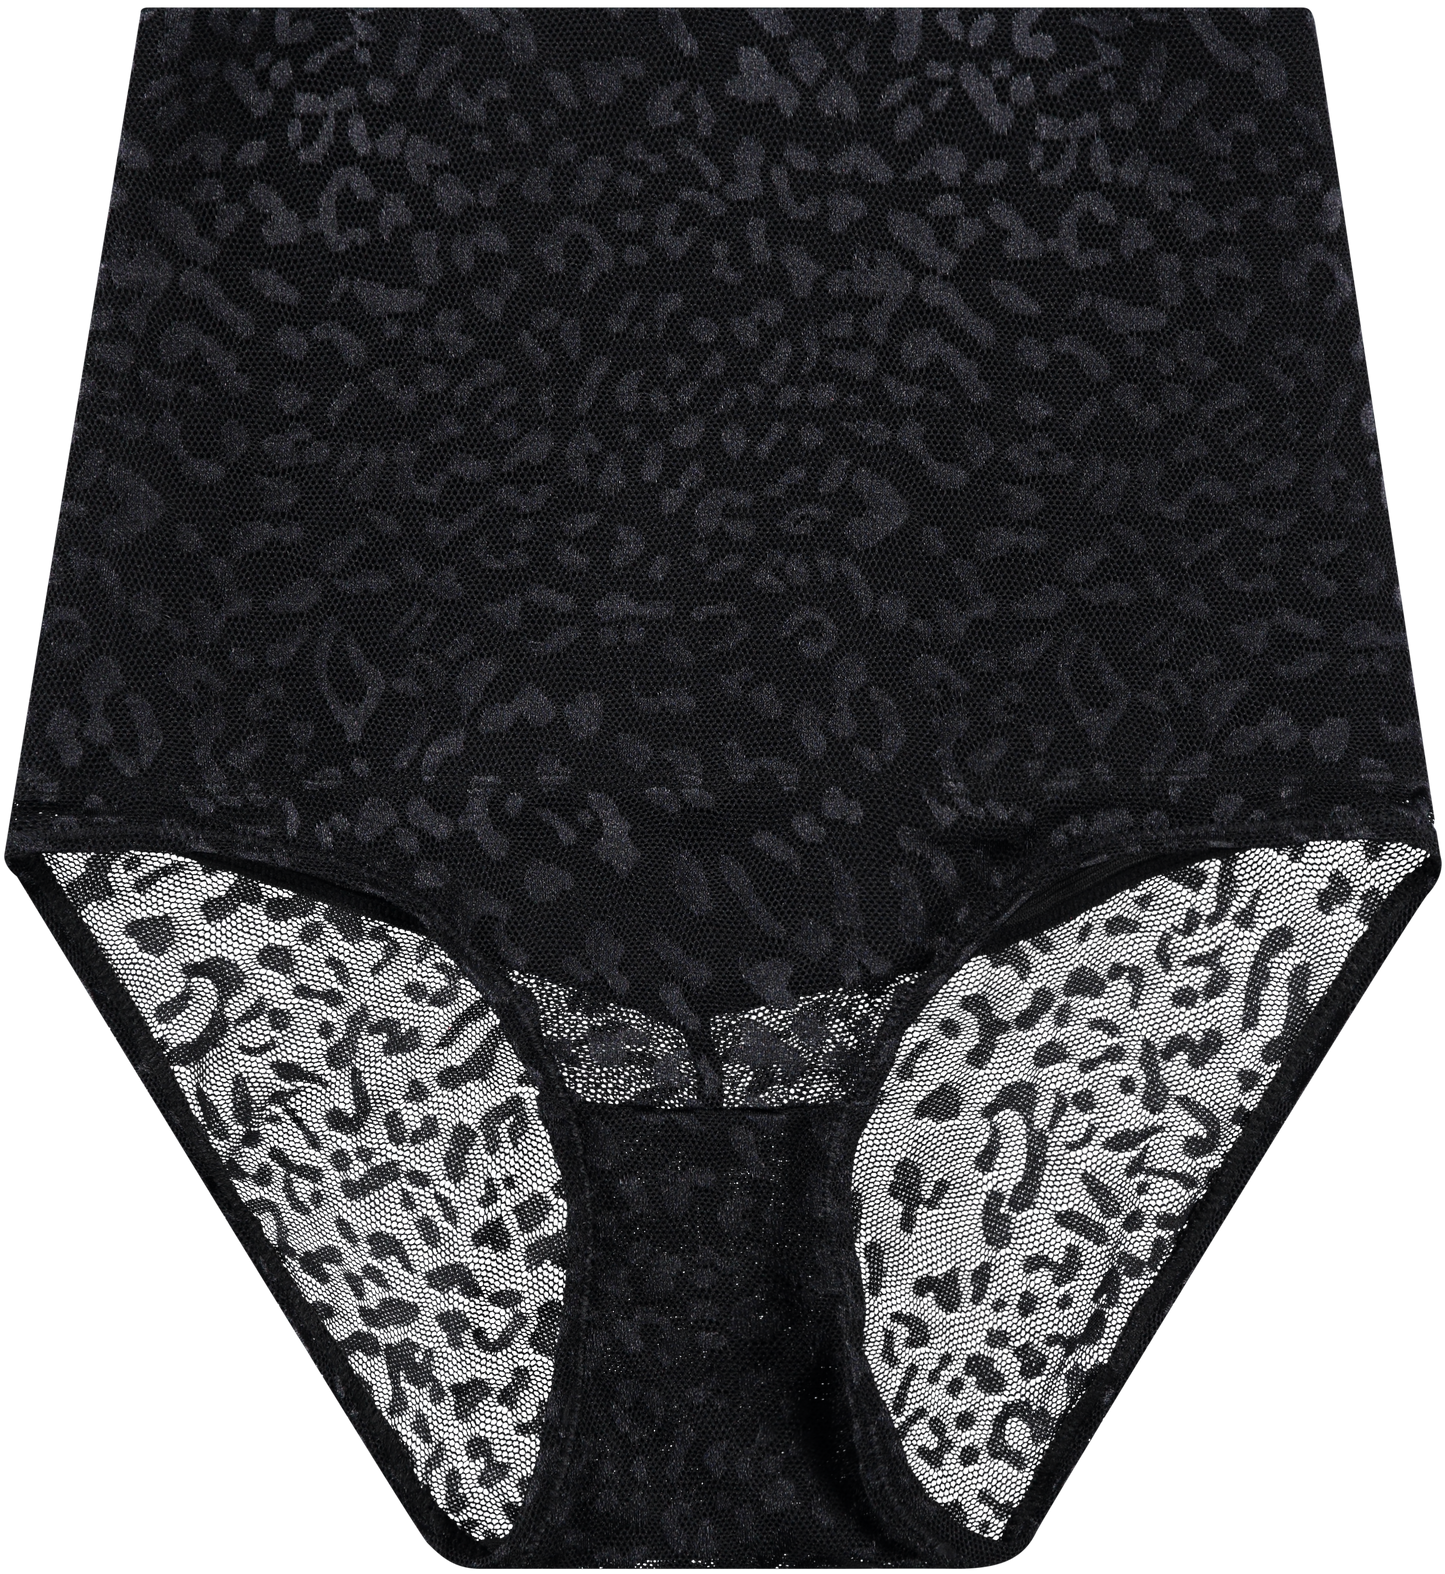 Wild Elegance : Designer Duo of Black Leopard Print Shaper Panties - Breathable Firm Control